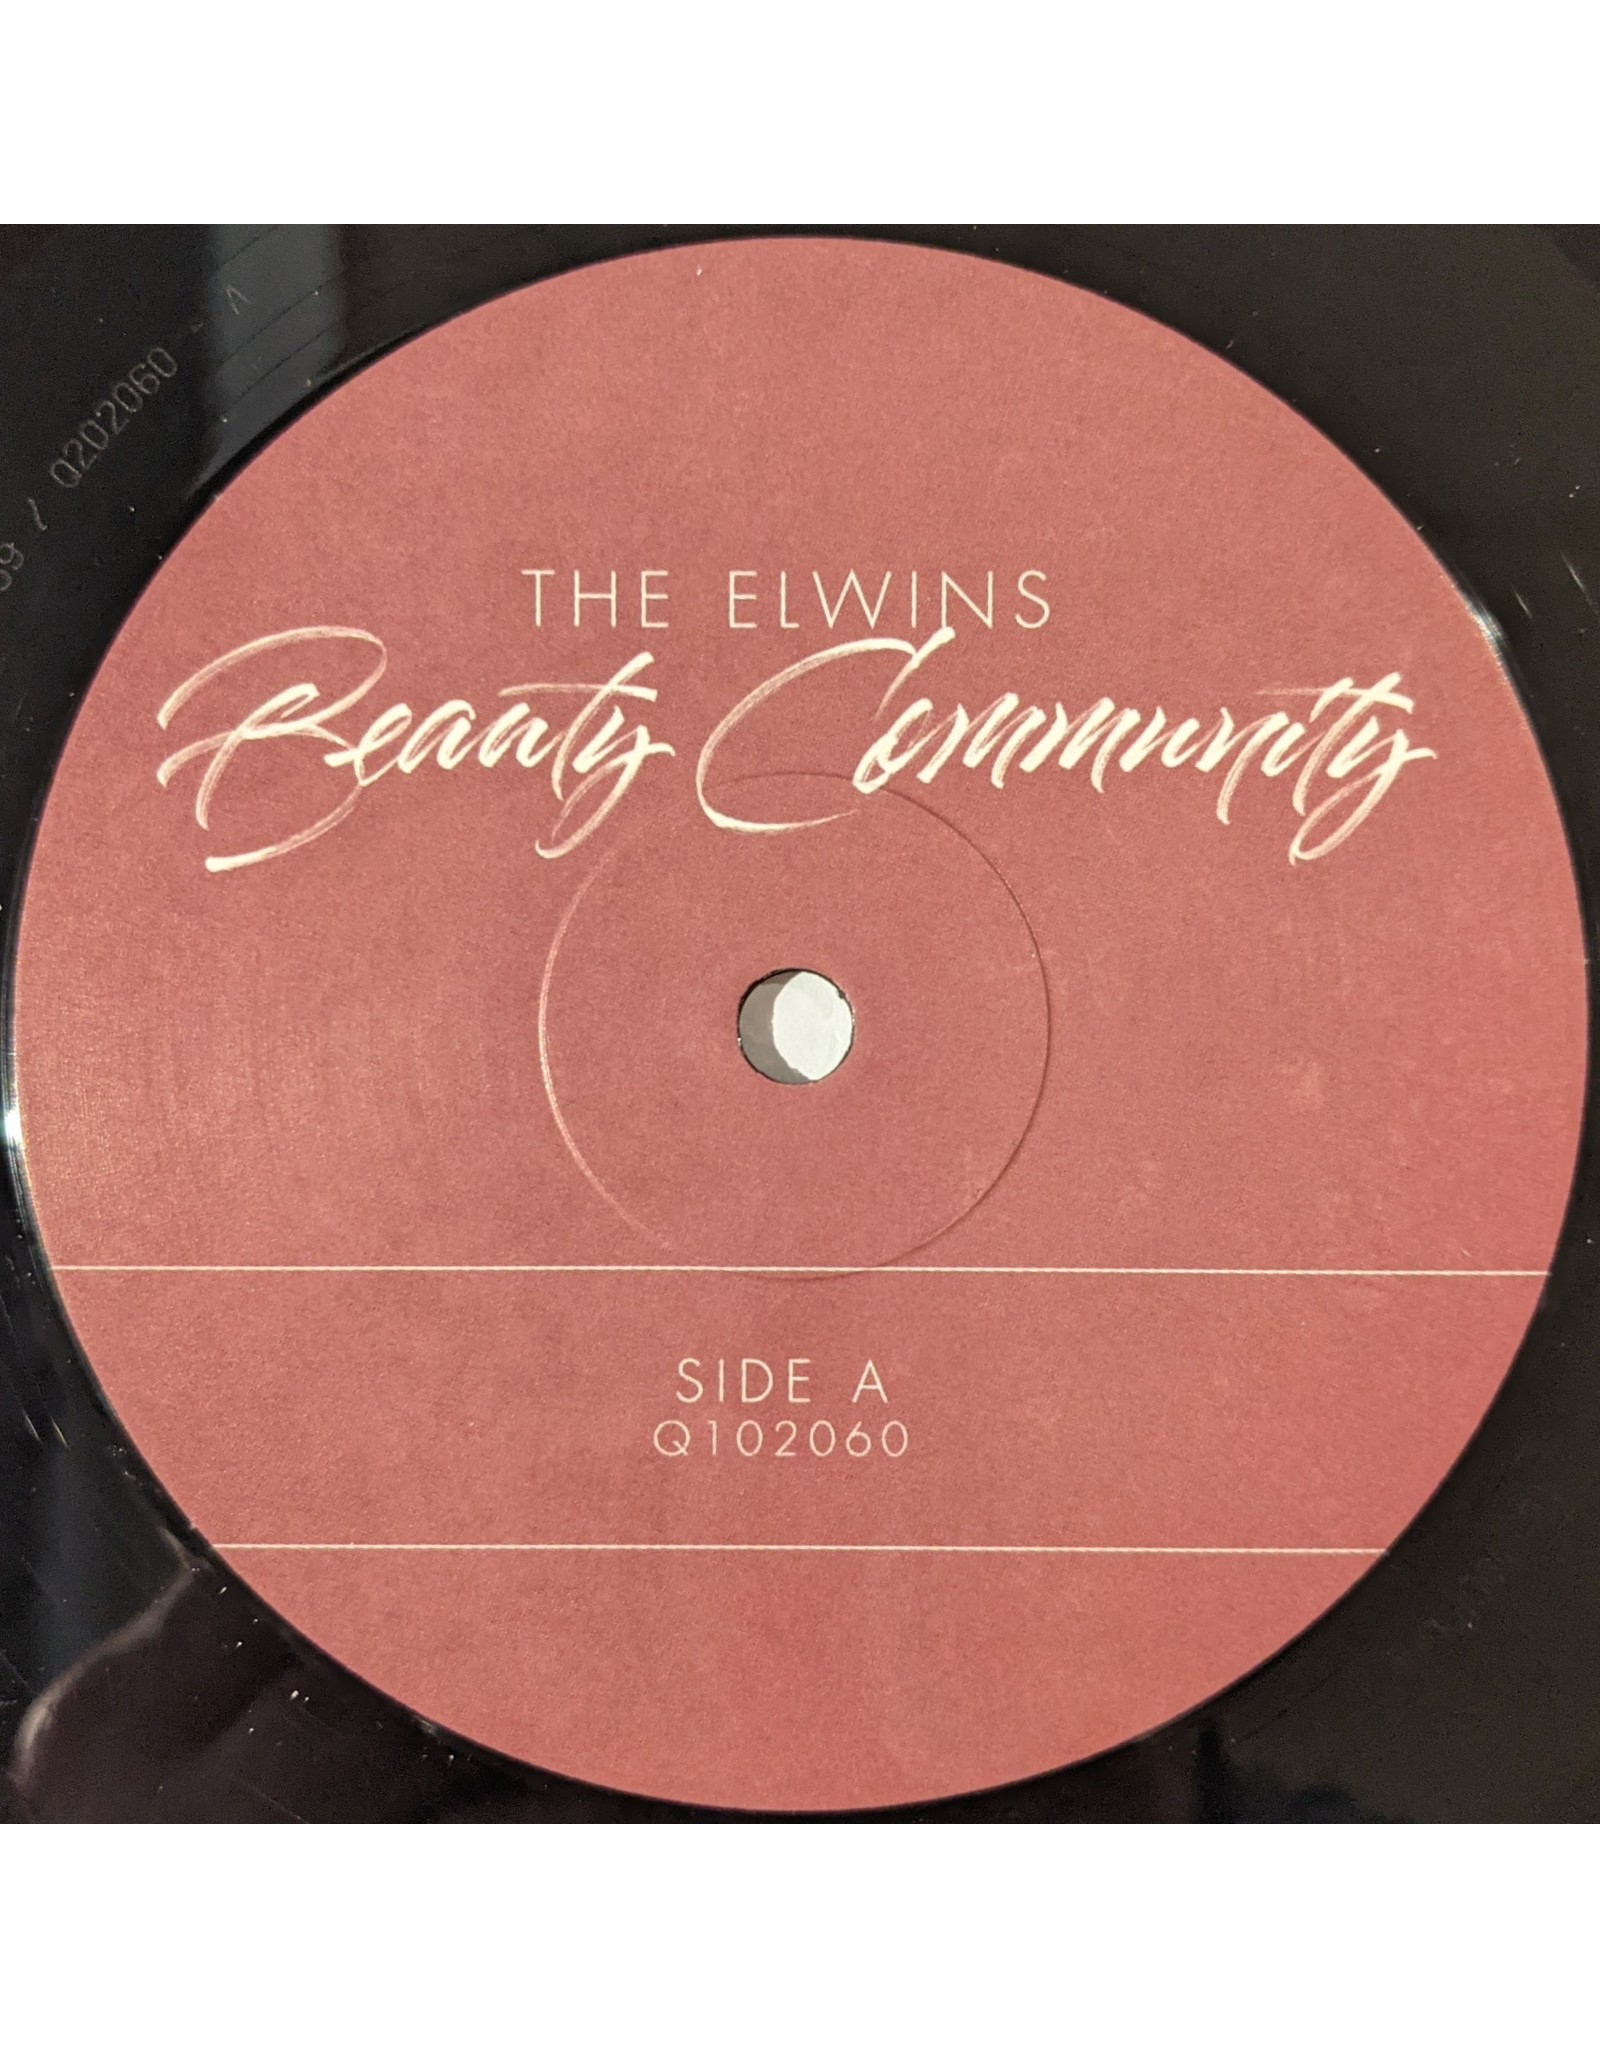 USED: The Elwins: Beauty Community LP